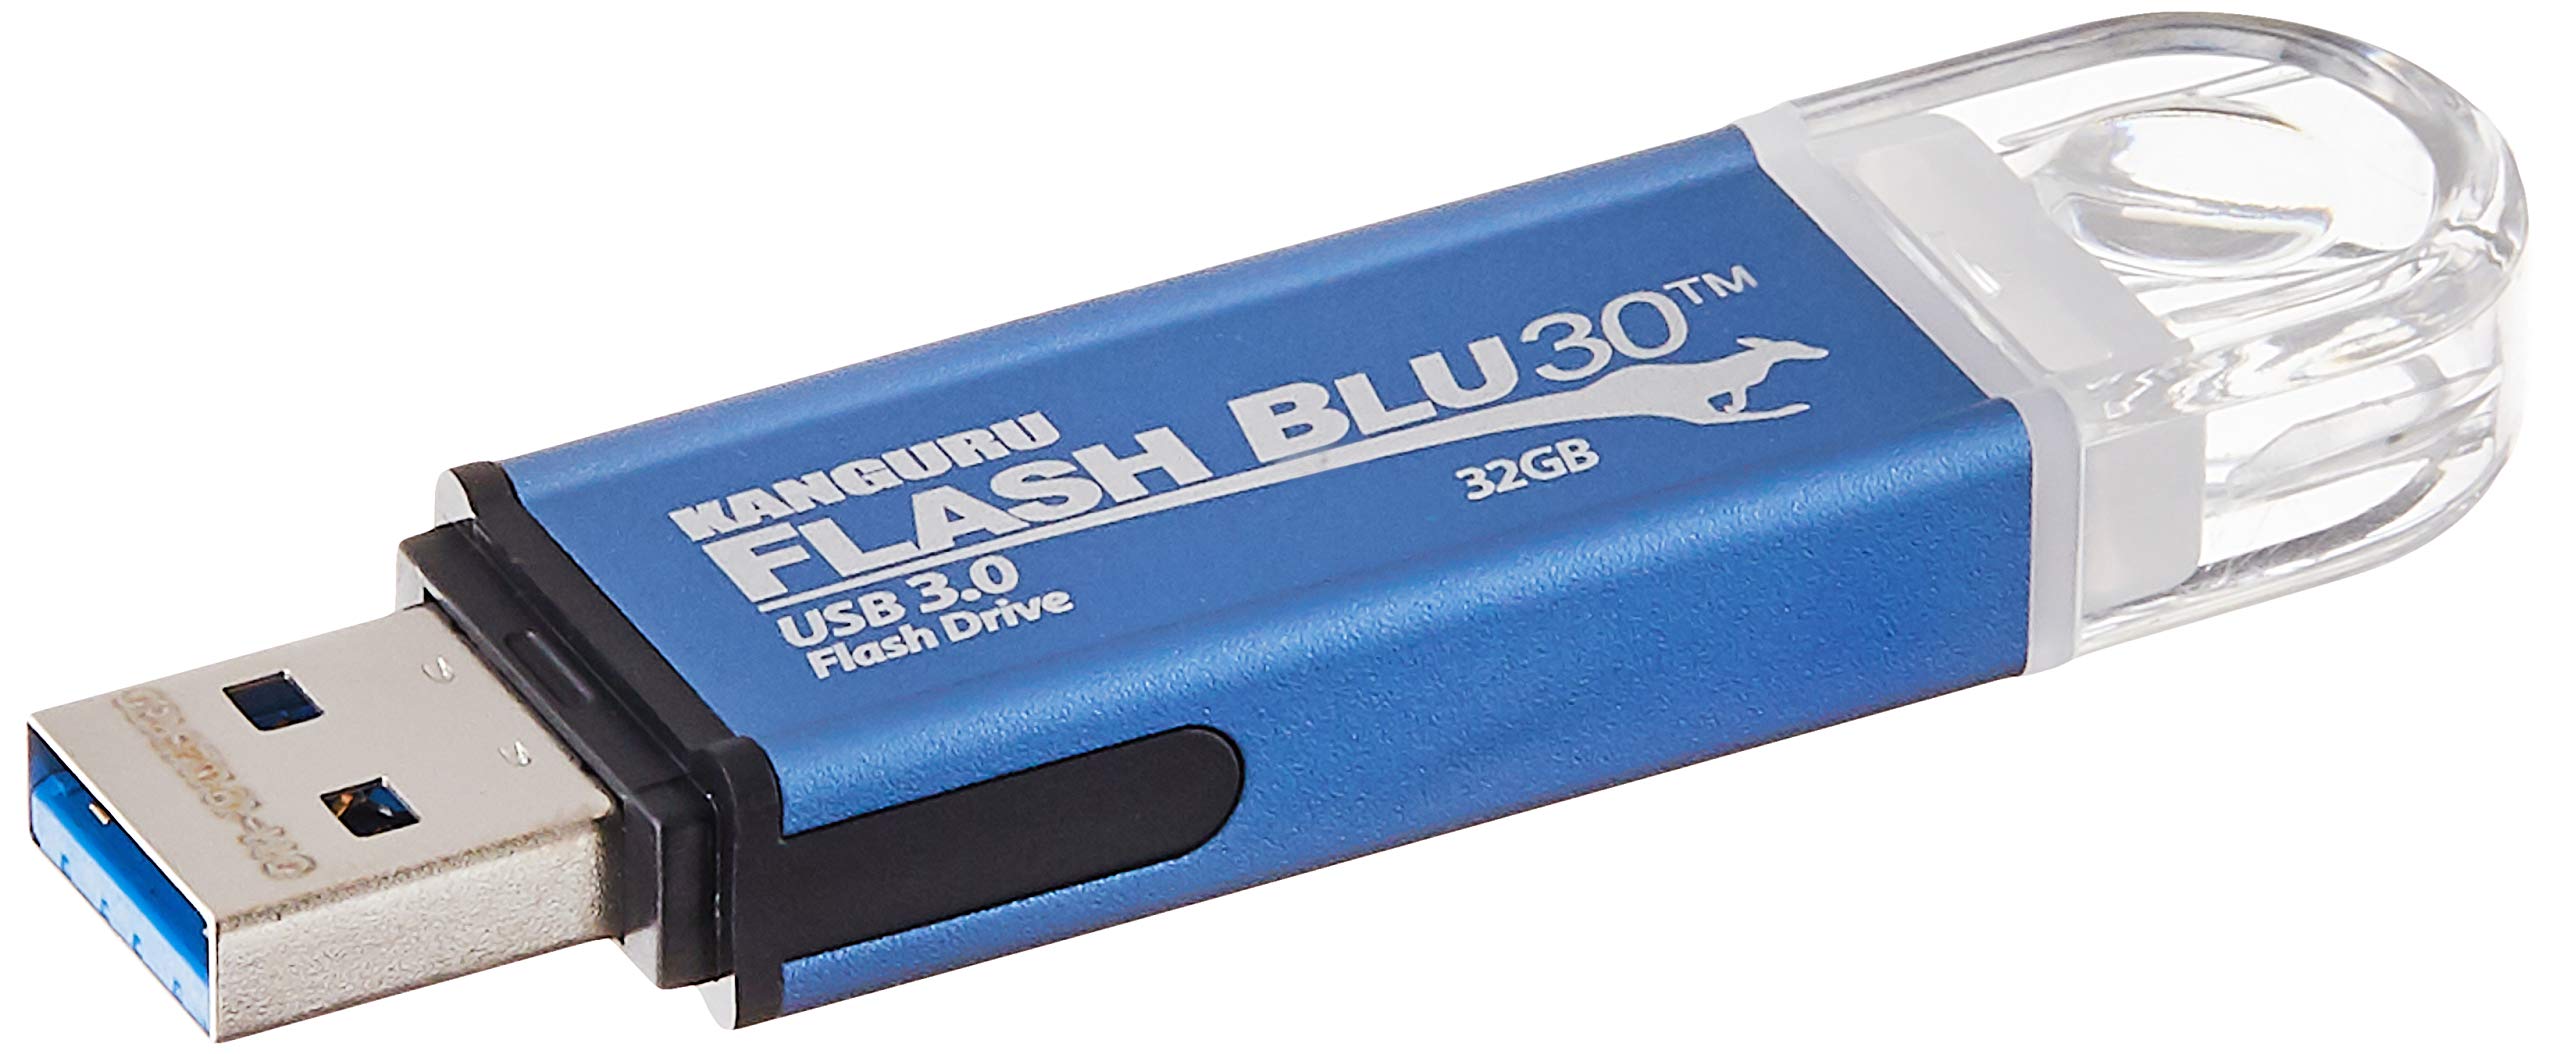 Write-protected USB flash drive